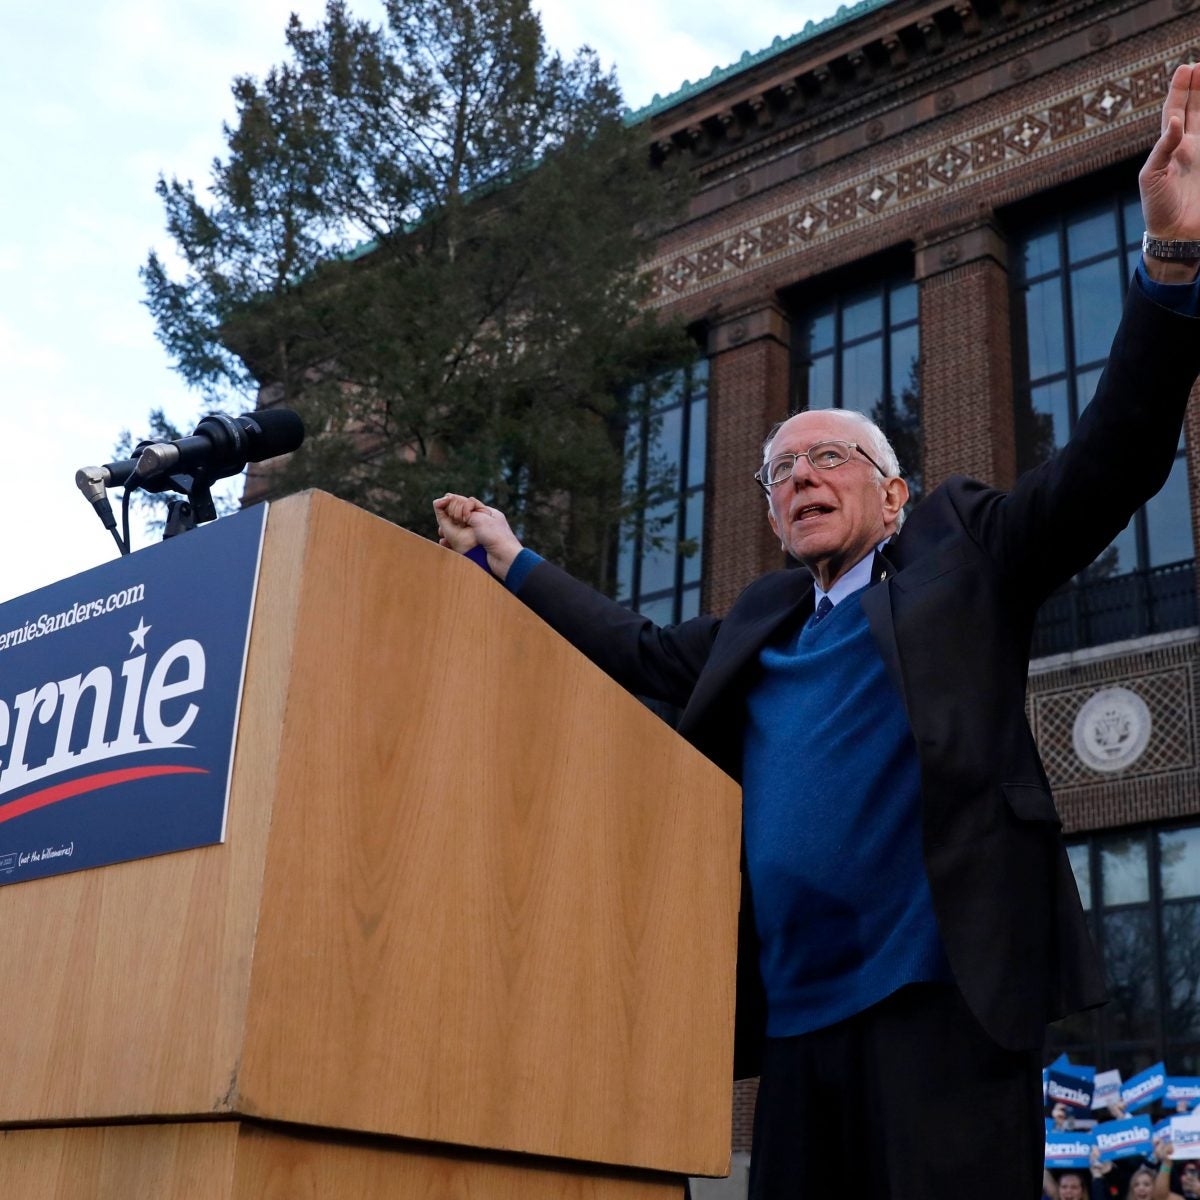 Bernie Sanders To End Presidential Campaign